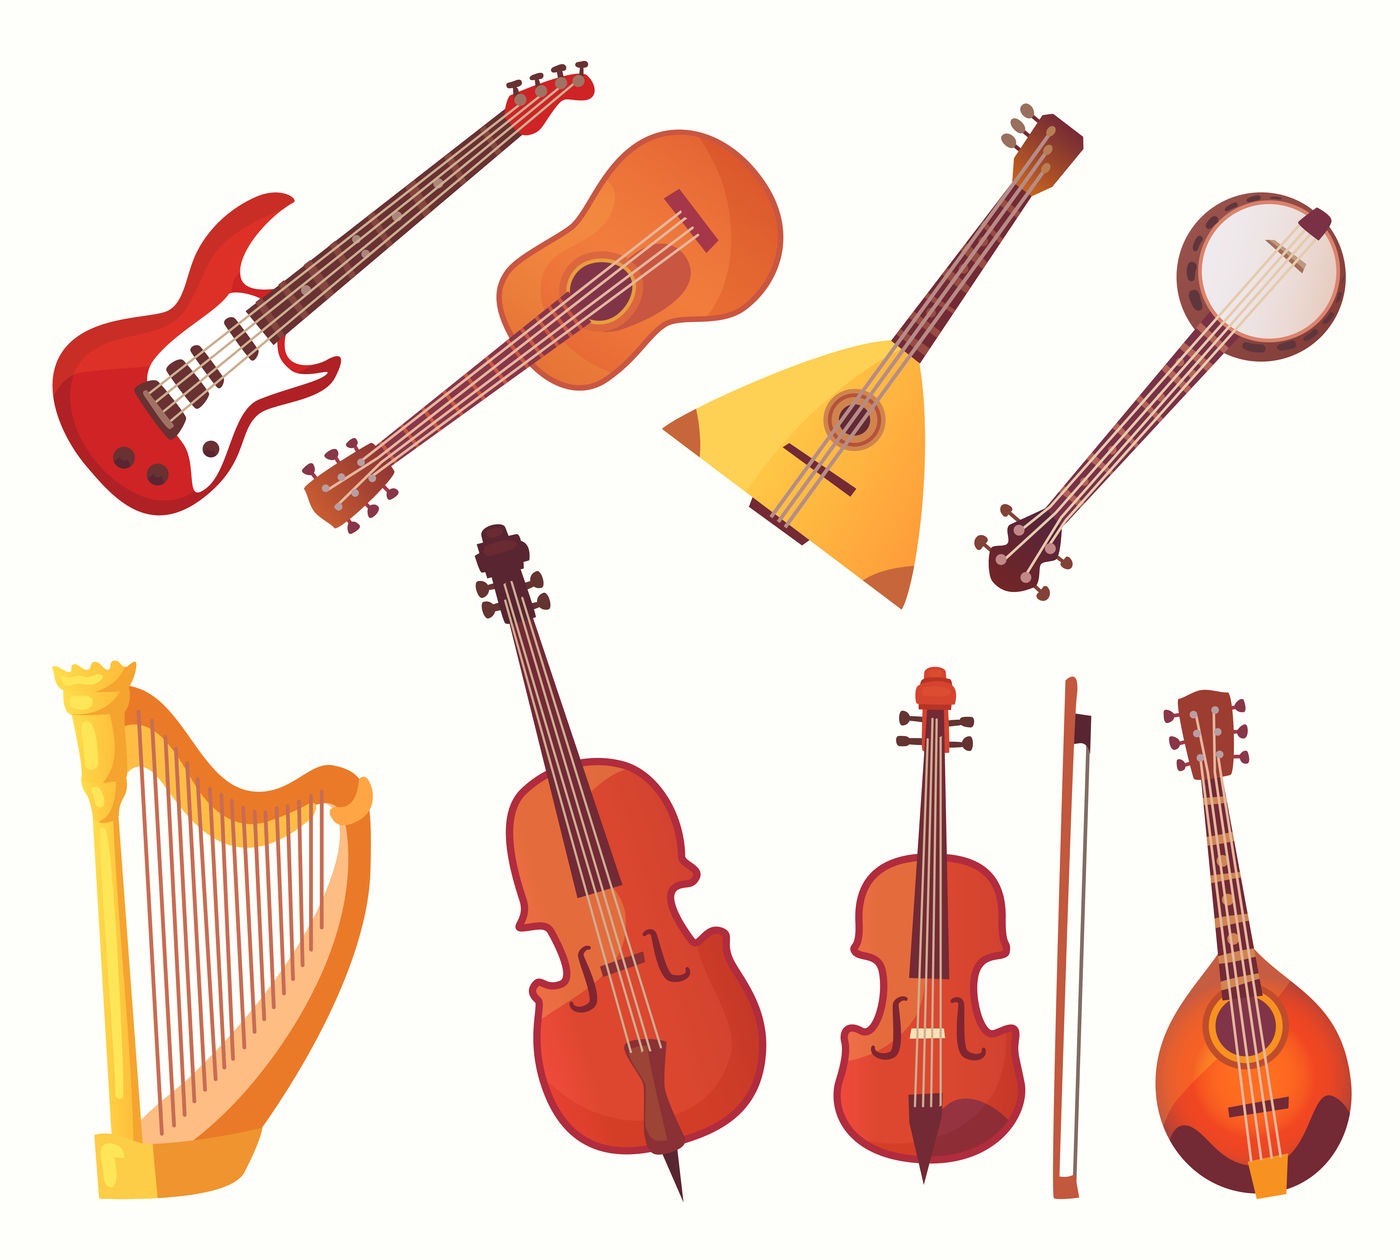 Cartoon musical instruments. Guitars music instrument vector collectio